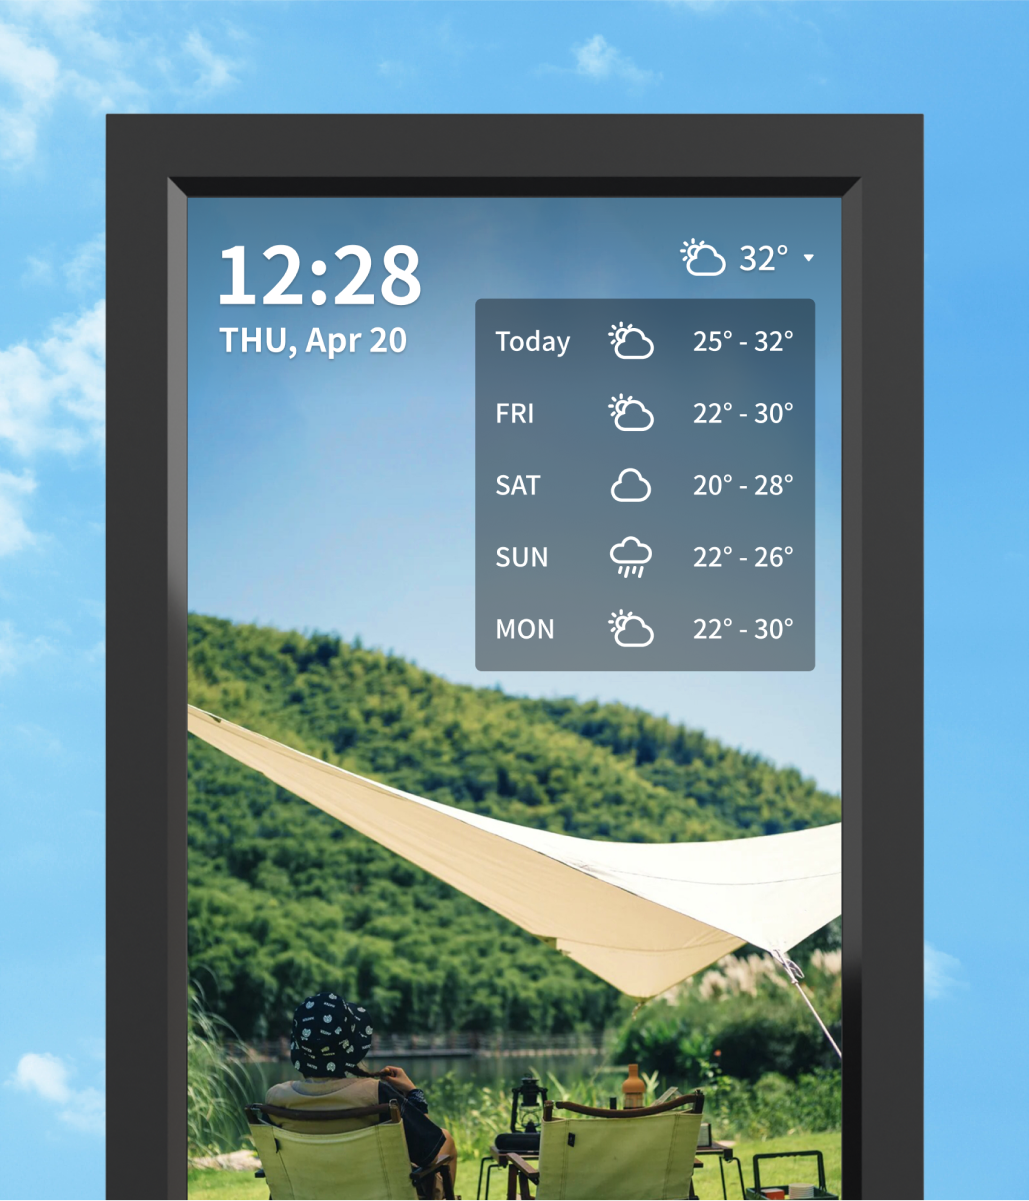 SyncGo Smart WiFi Digital Calendar 10.1 inch touch screen WiFi